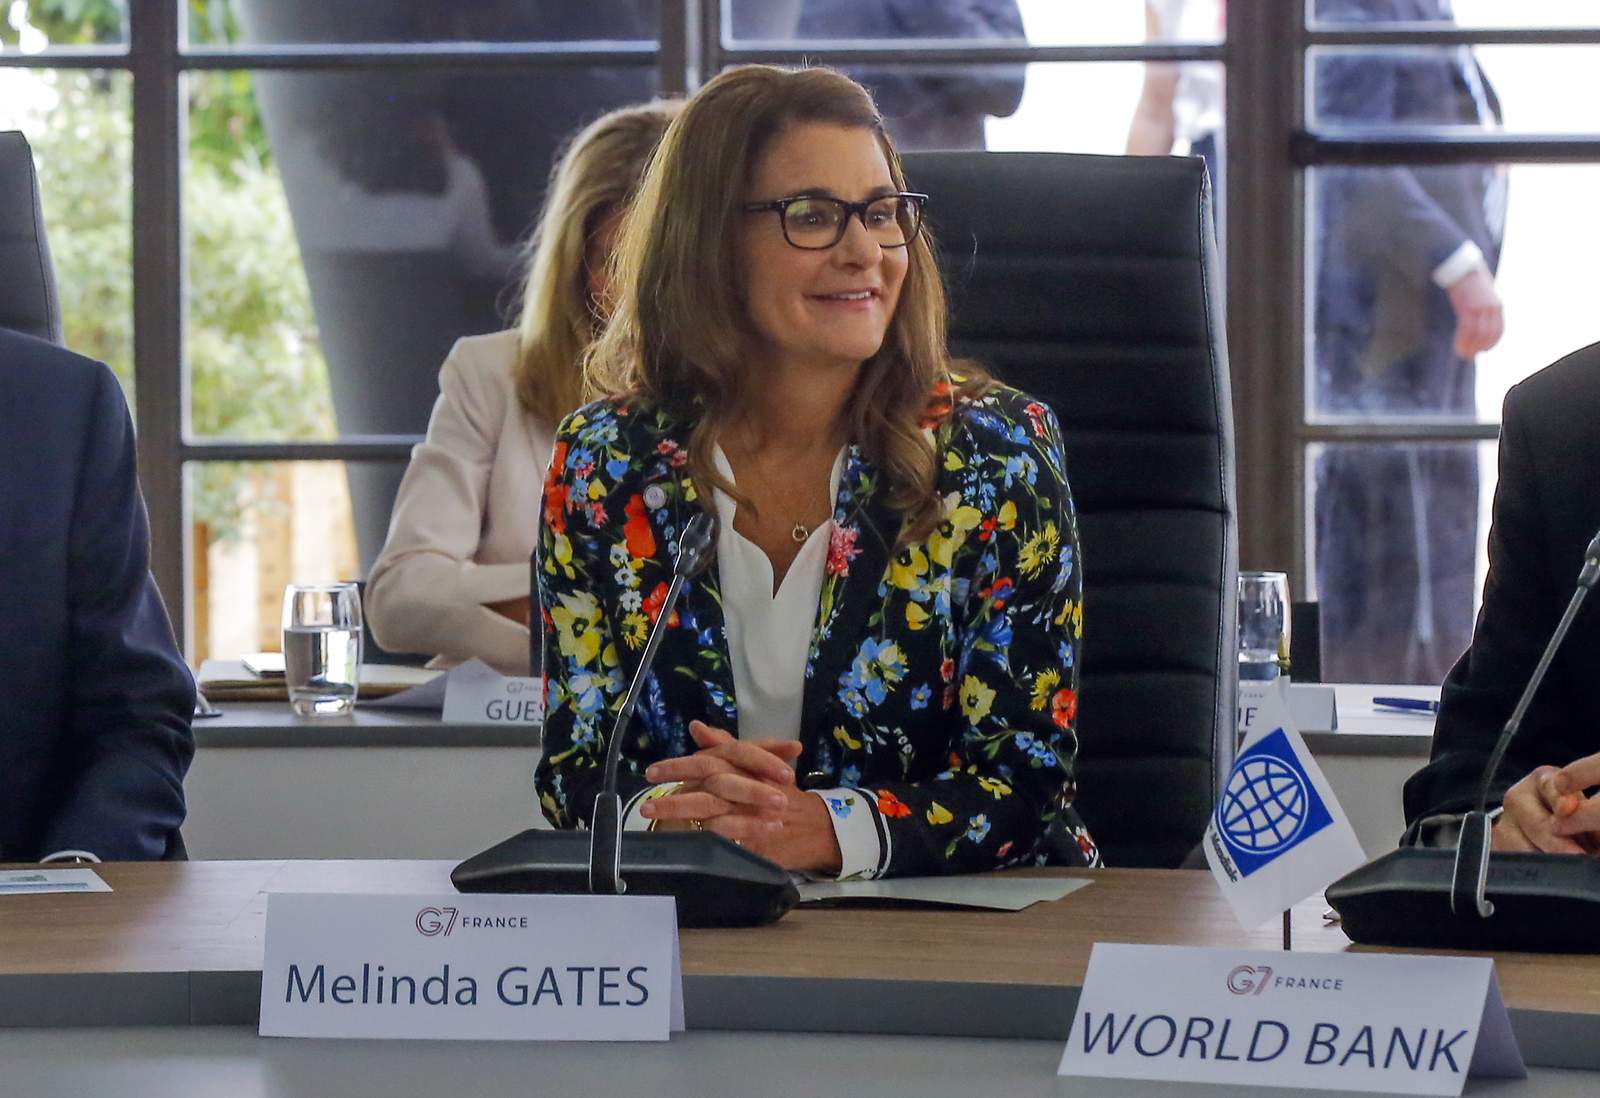 Melinda Gates says philanthropy, government work best united